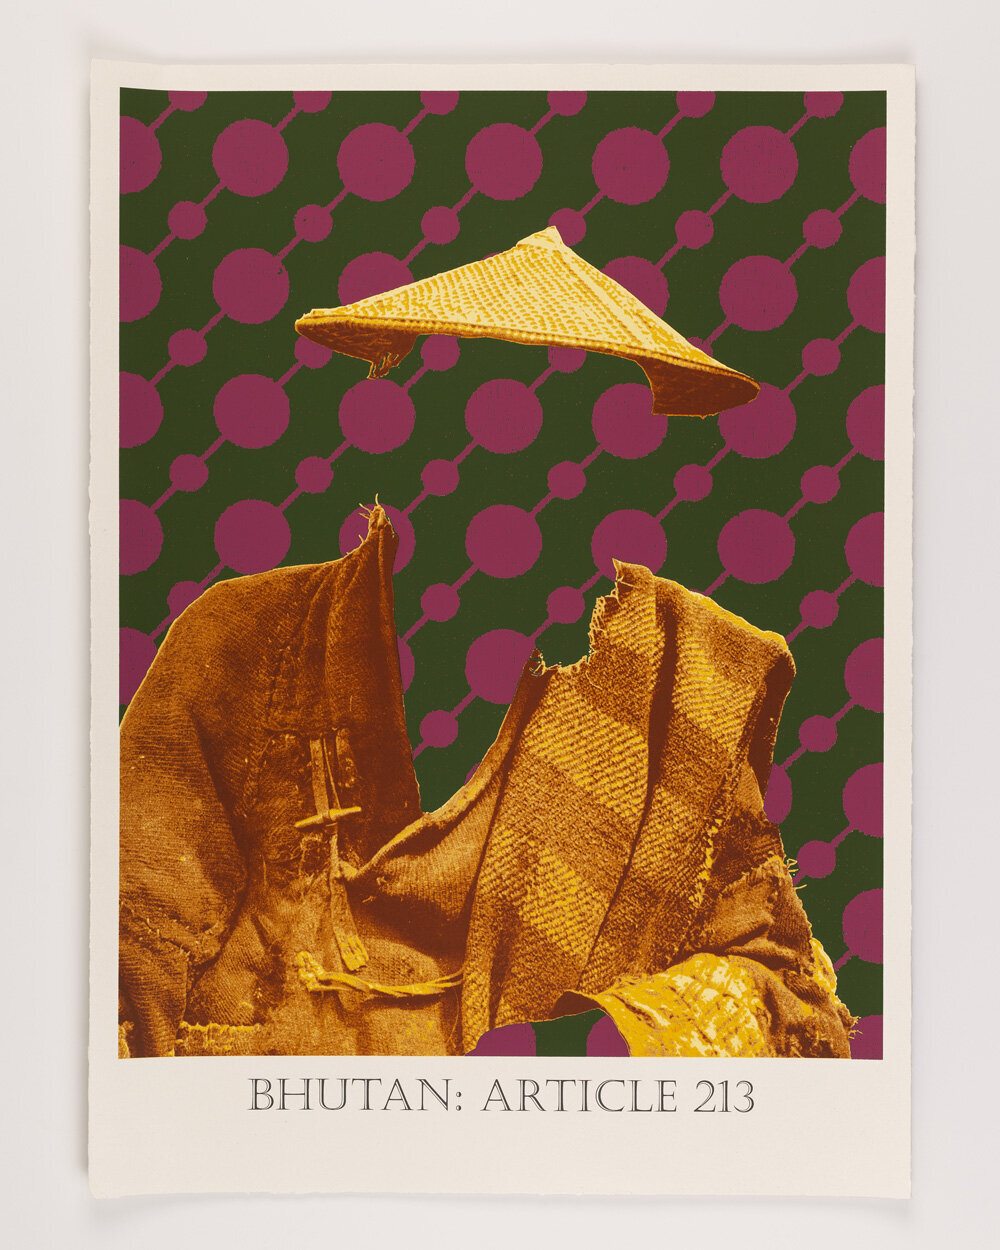 Bhutan: Article 213